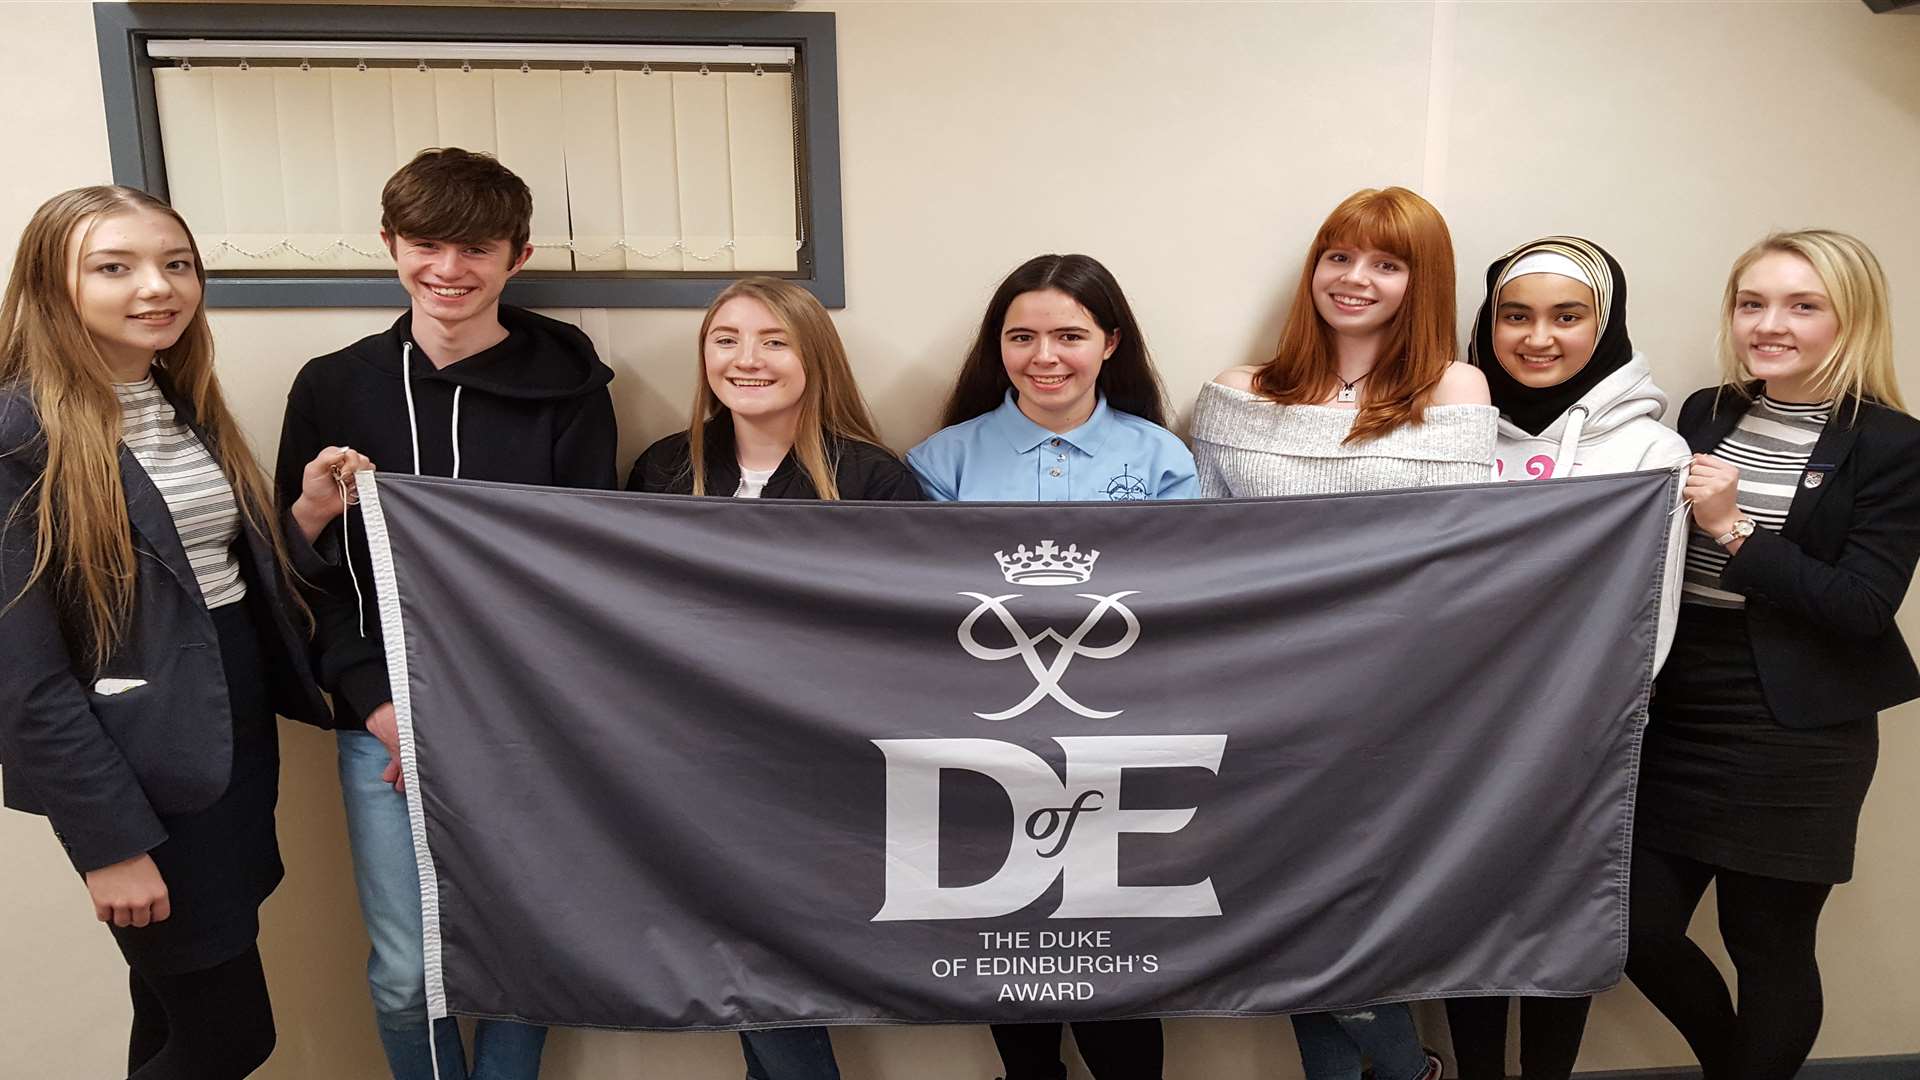 Members of the Medway Duke of Edinburgh Award Youth Panel